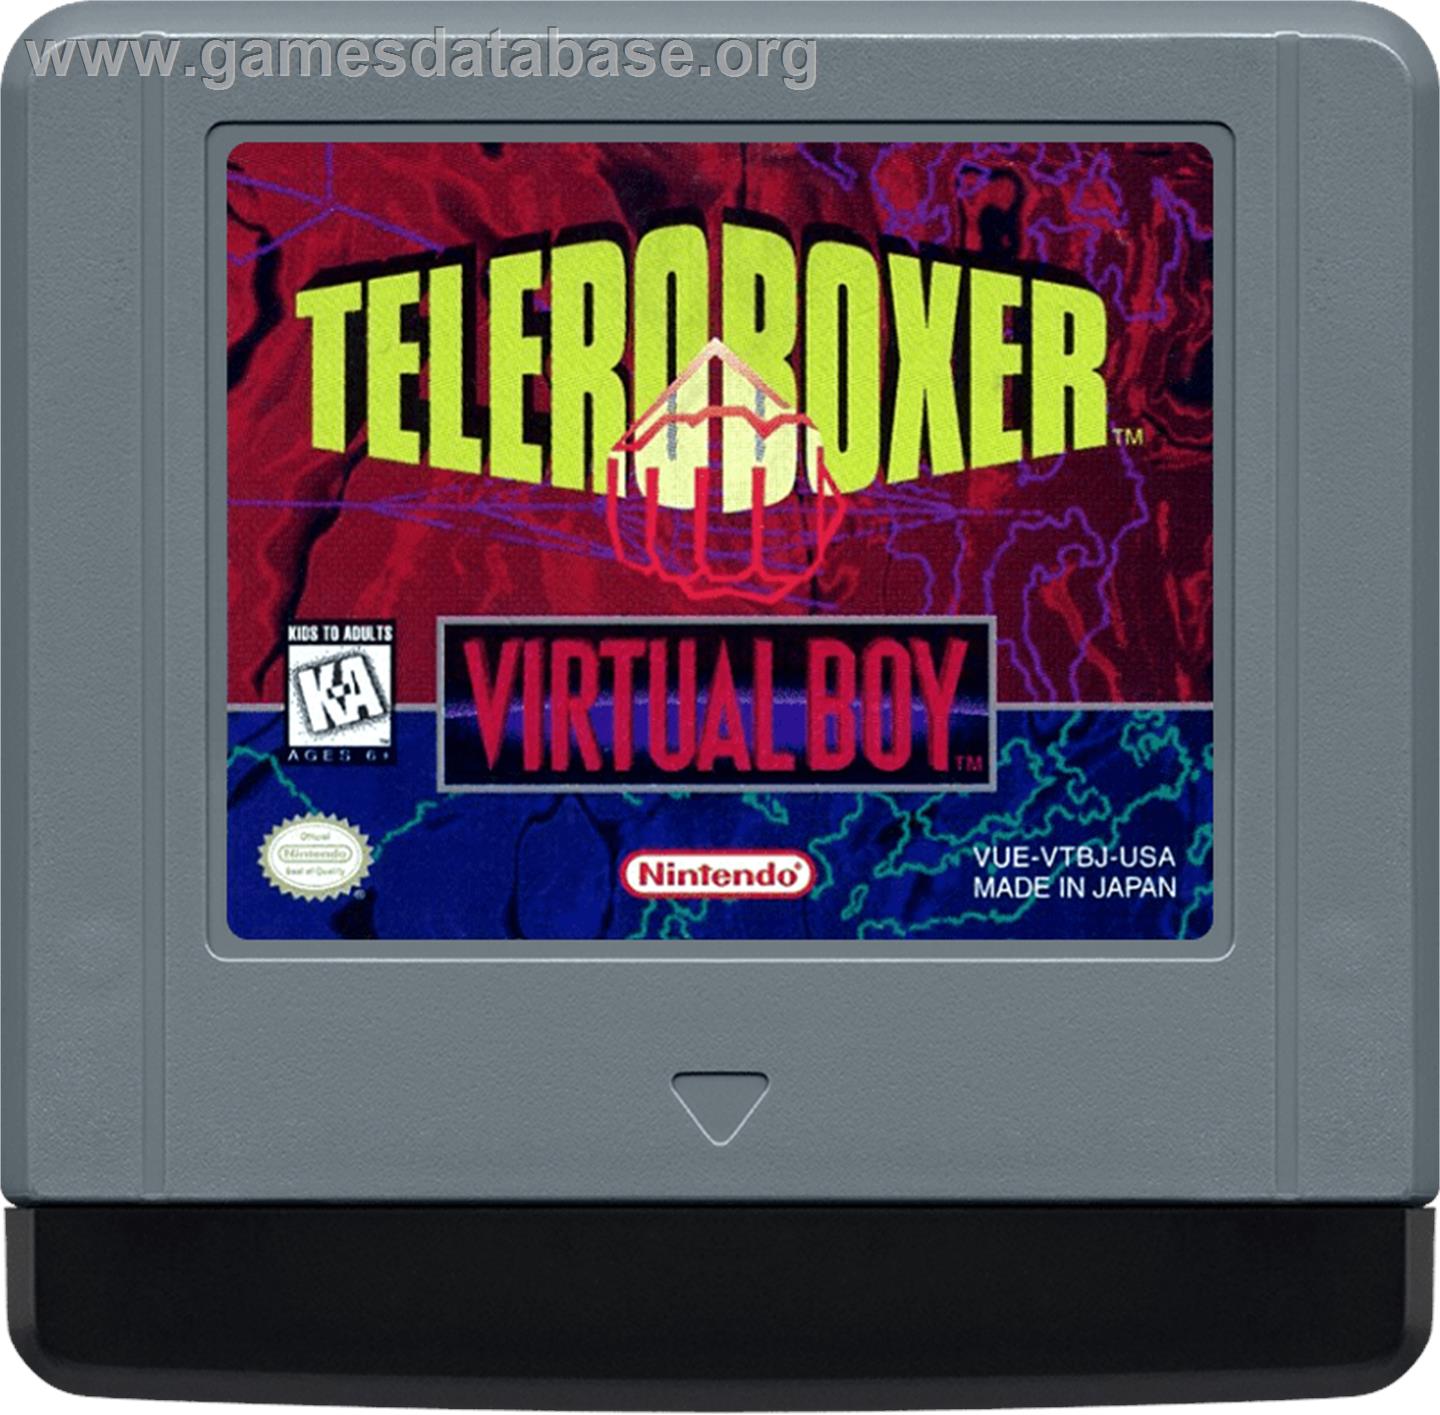 Teleroboxer - Nintendo Virtual Boy - Artwork - Cartridge